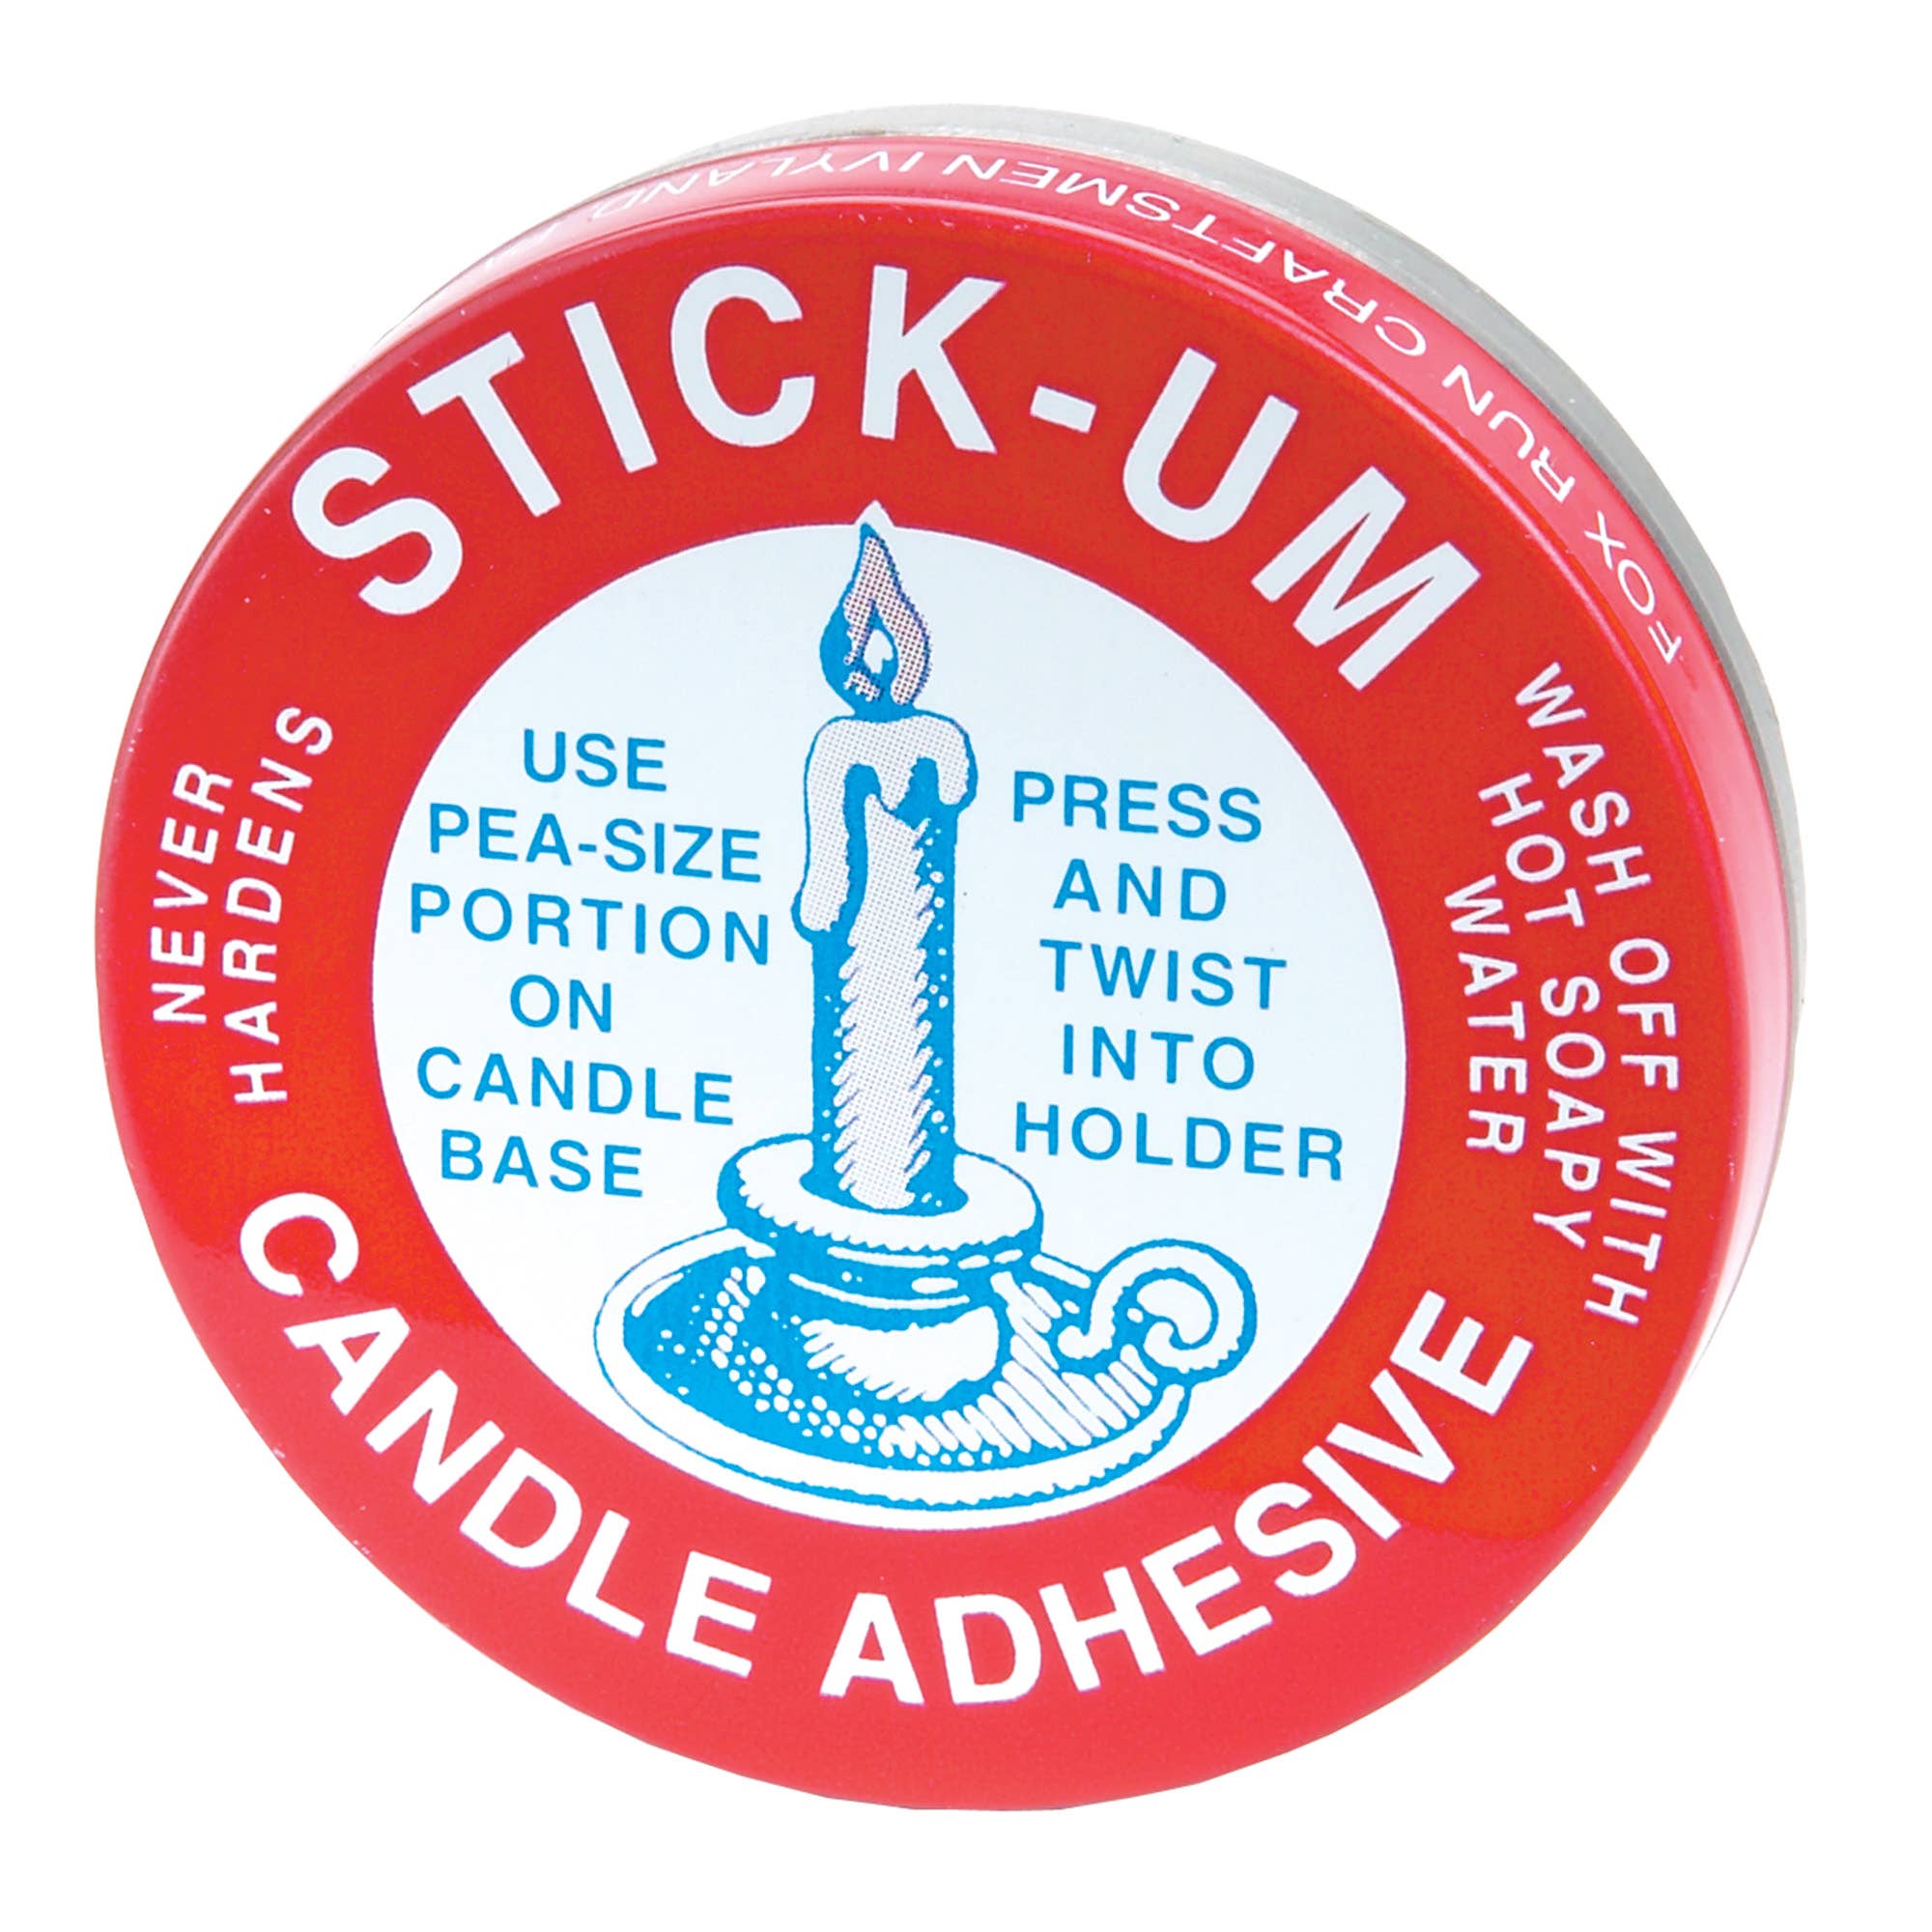 Stick-Um Candle Adhesive Display